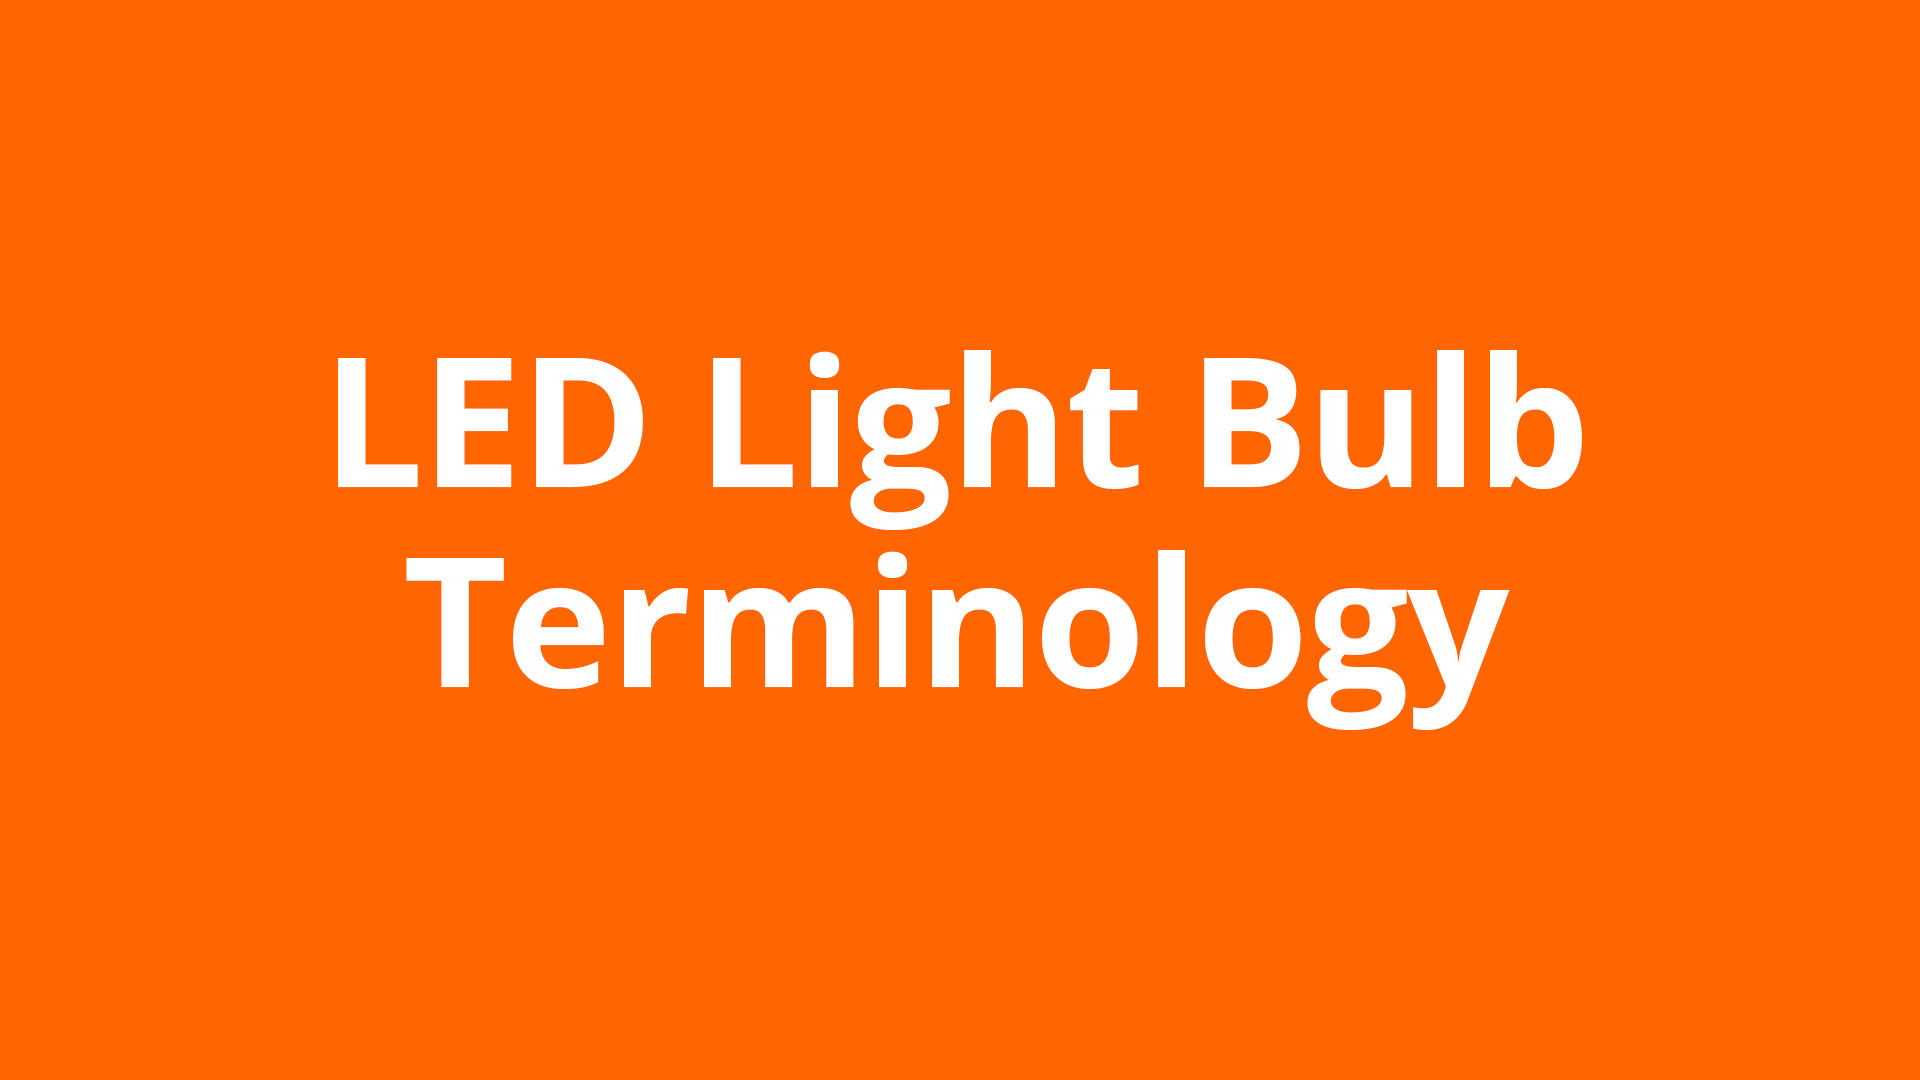 LED Light Bulb Terminology